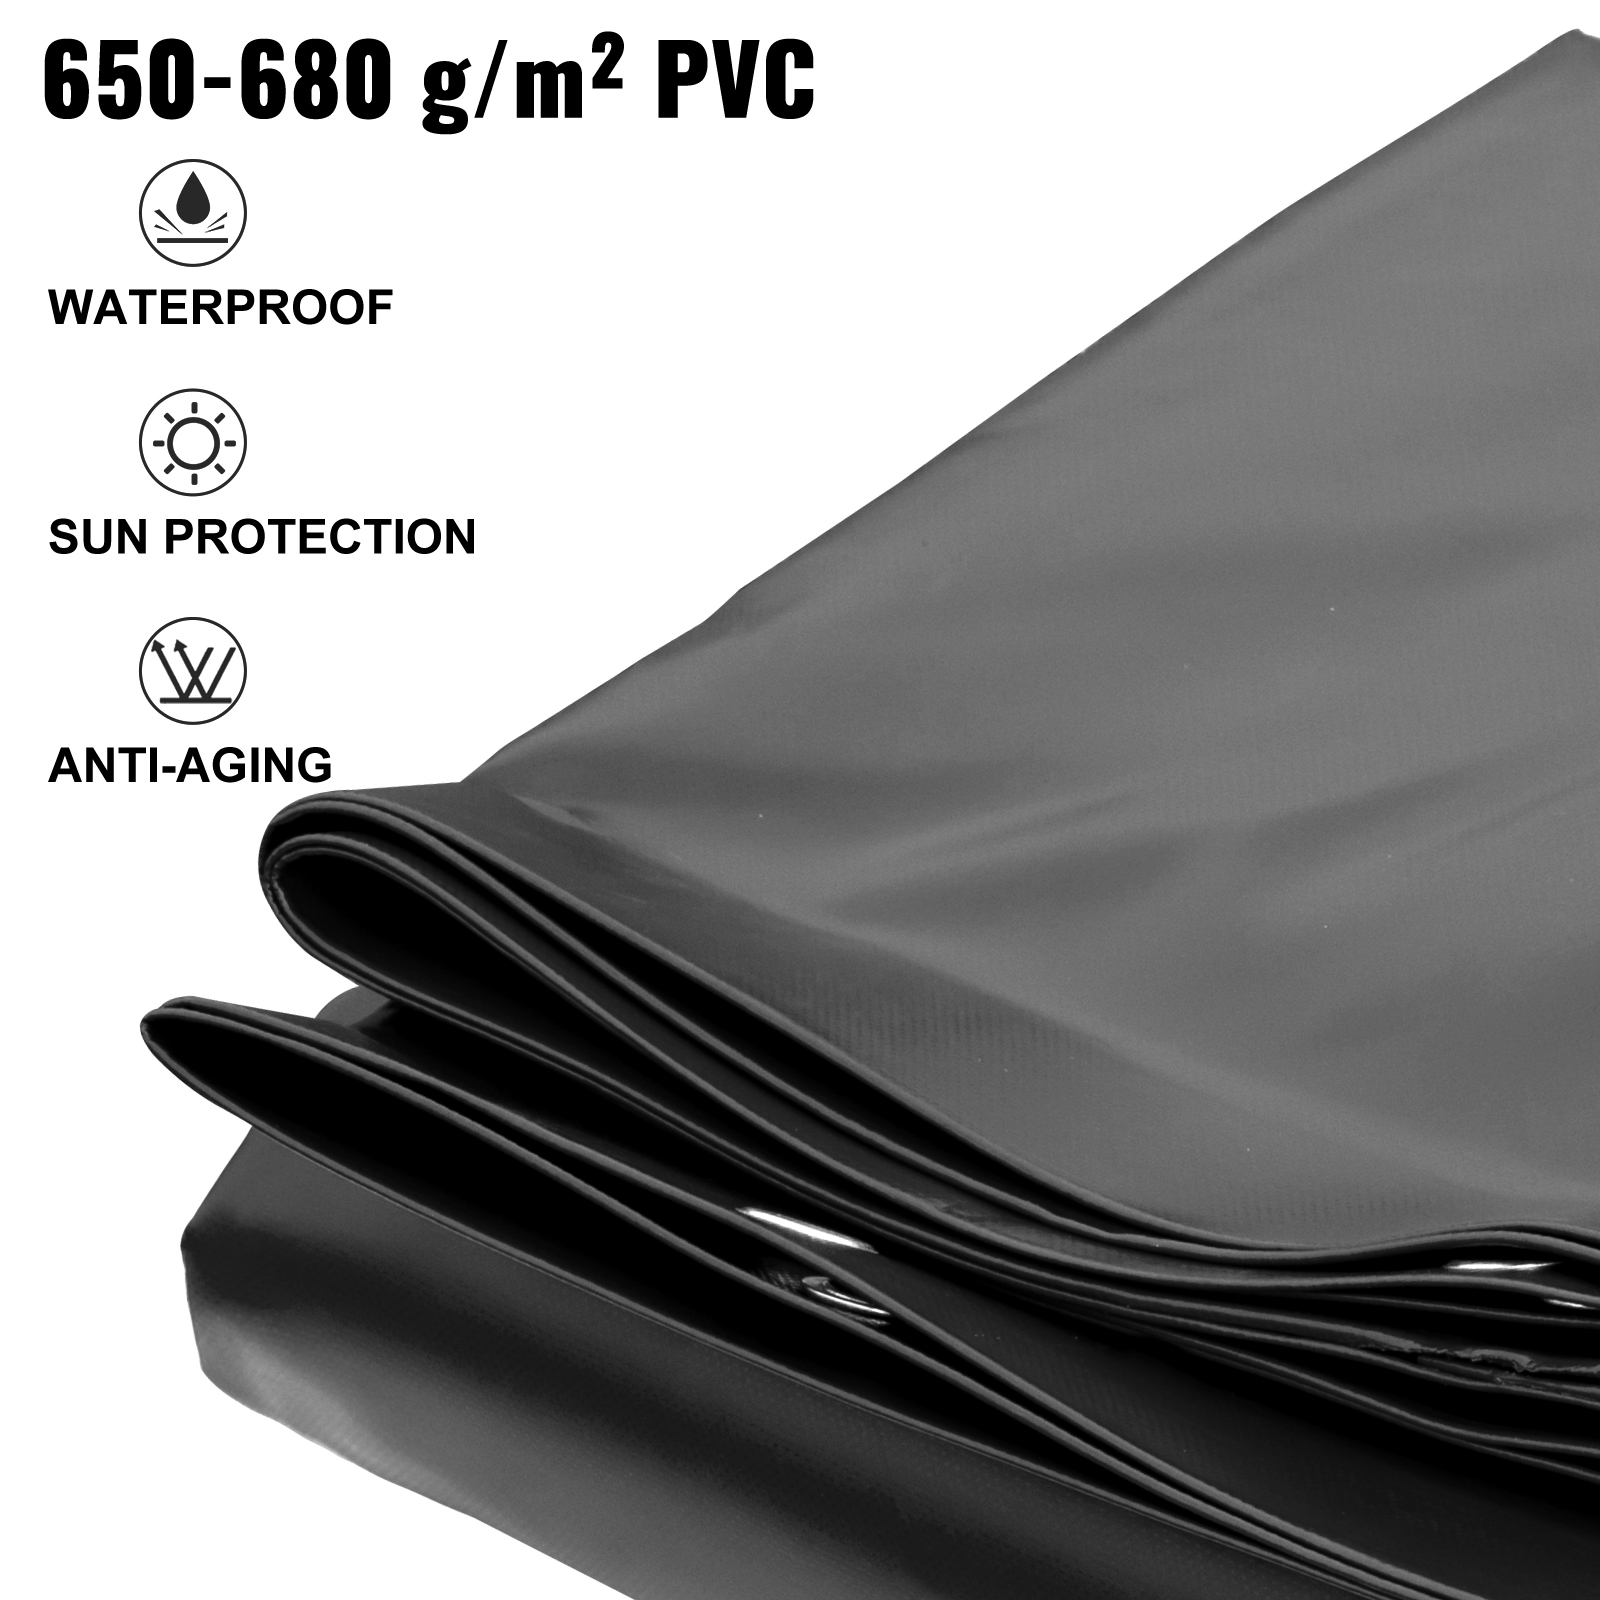 VEVOR medencetakaró téglalap alakú 3,5 x 5 m medencetakaró PVC medencetakaró fekete téliponyva téglalap medencetakaró szennyeződéstaszító